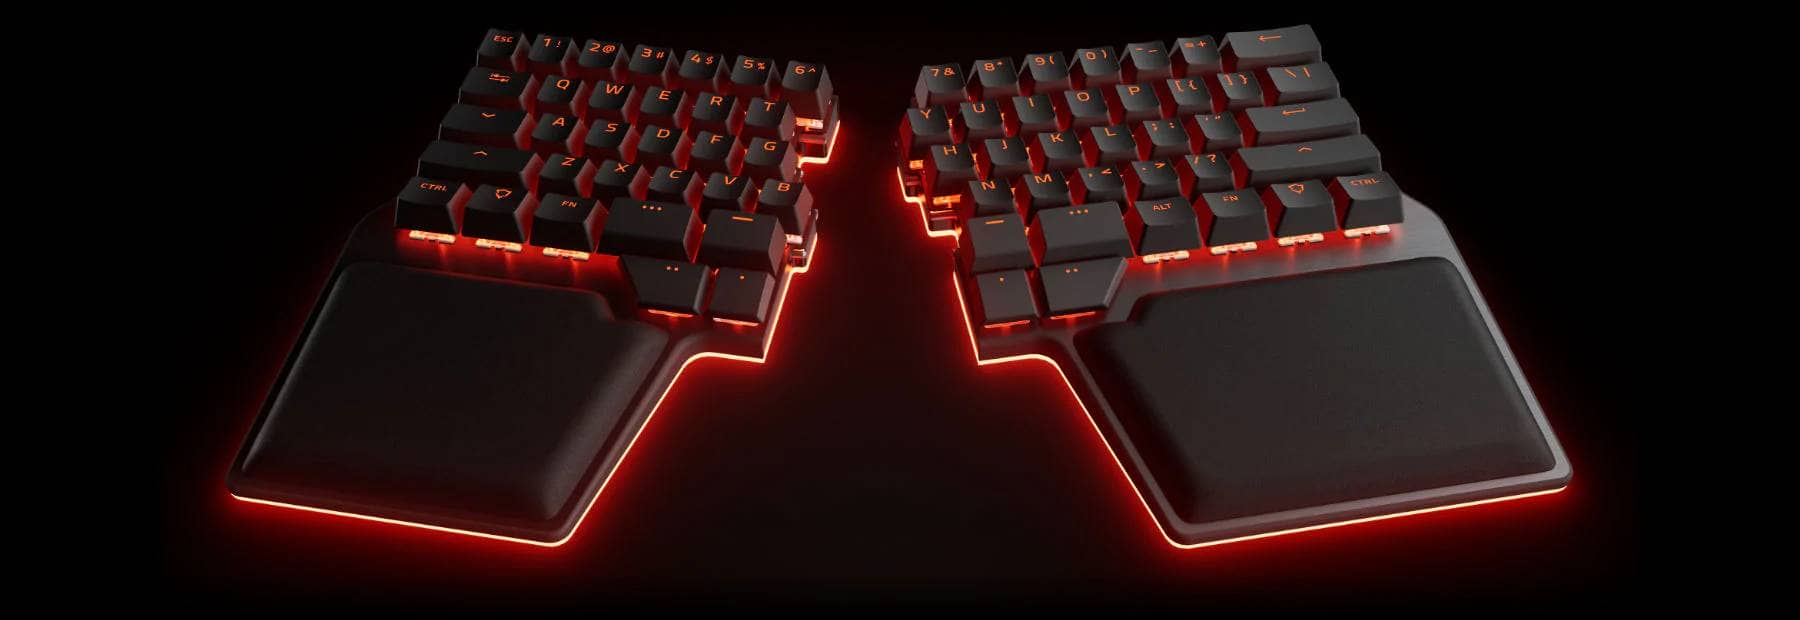 split ergonomic keyboard